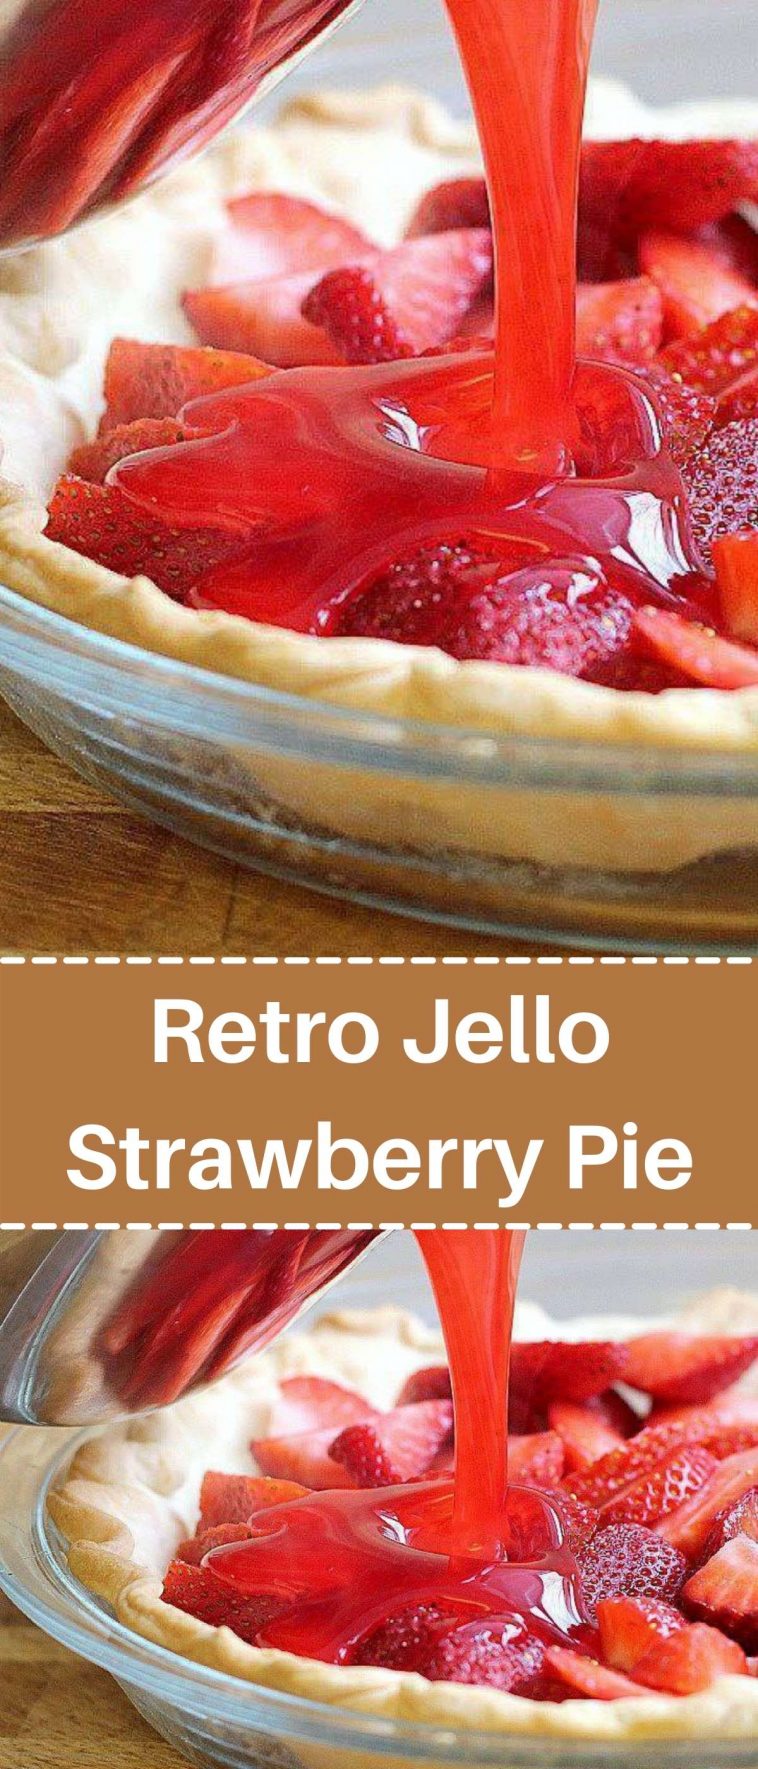 Retro Jello Strawberry Pie